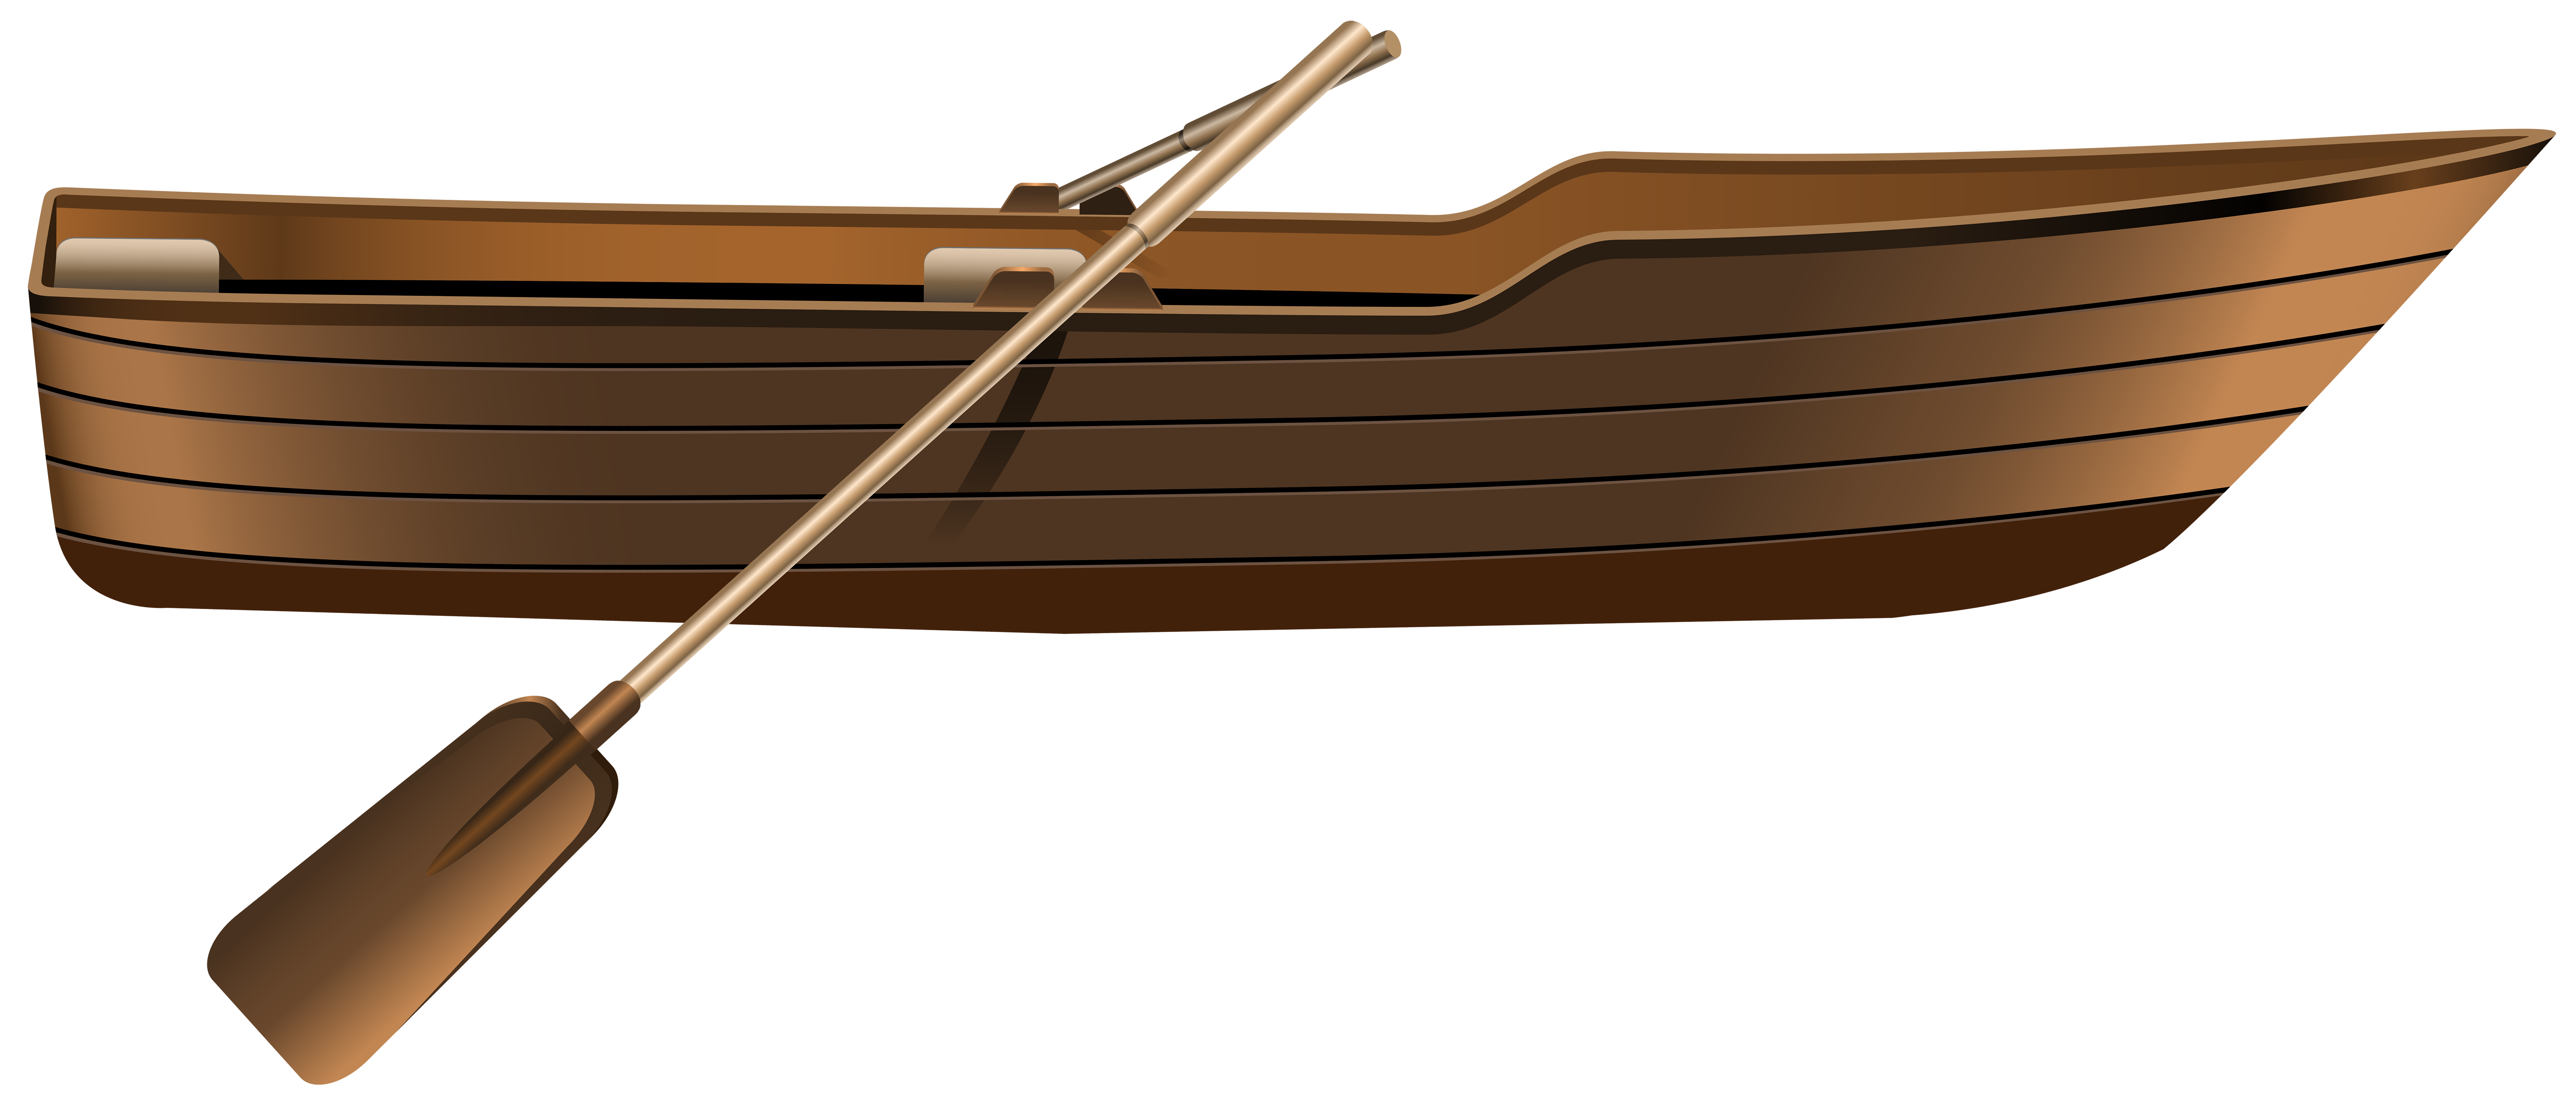 Лодка картинка для детей на прозрачном фоне. Лодка сбоку вектор. Лодка деревянная с веслами. Лодка на прозрачном фоне. Лодка с боку.